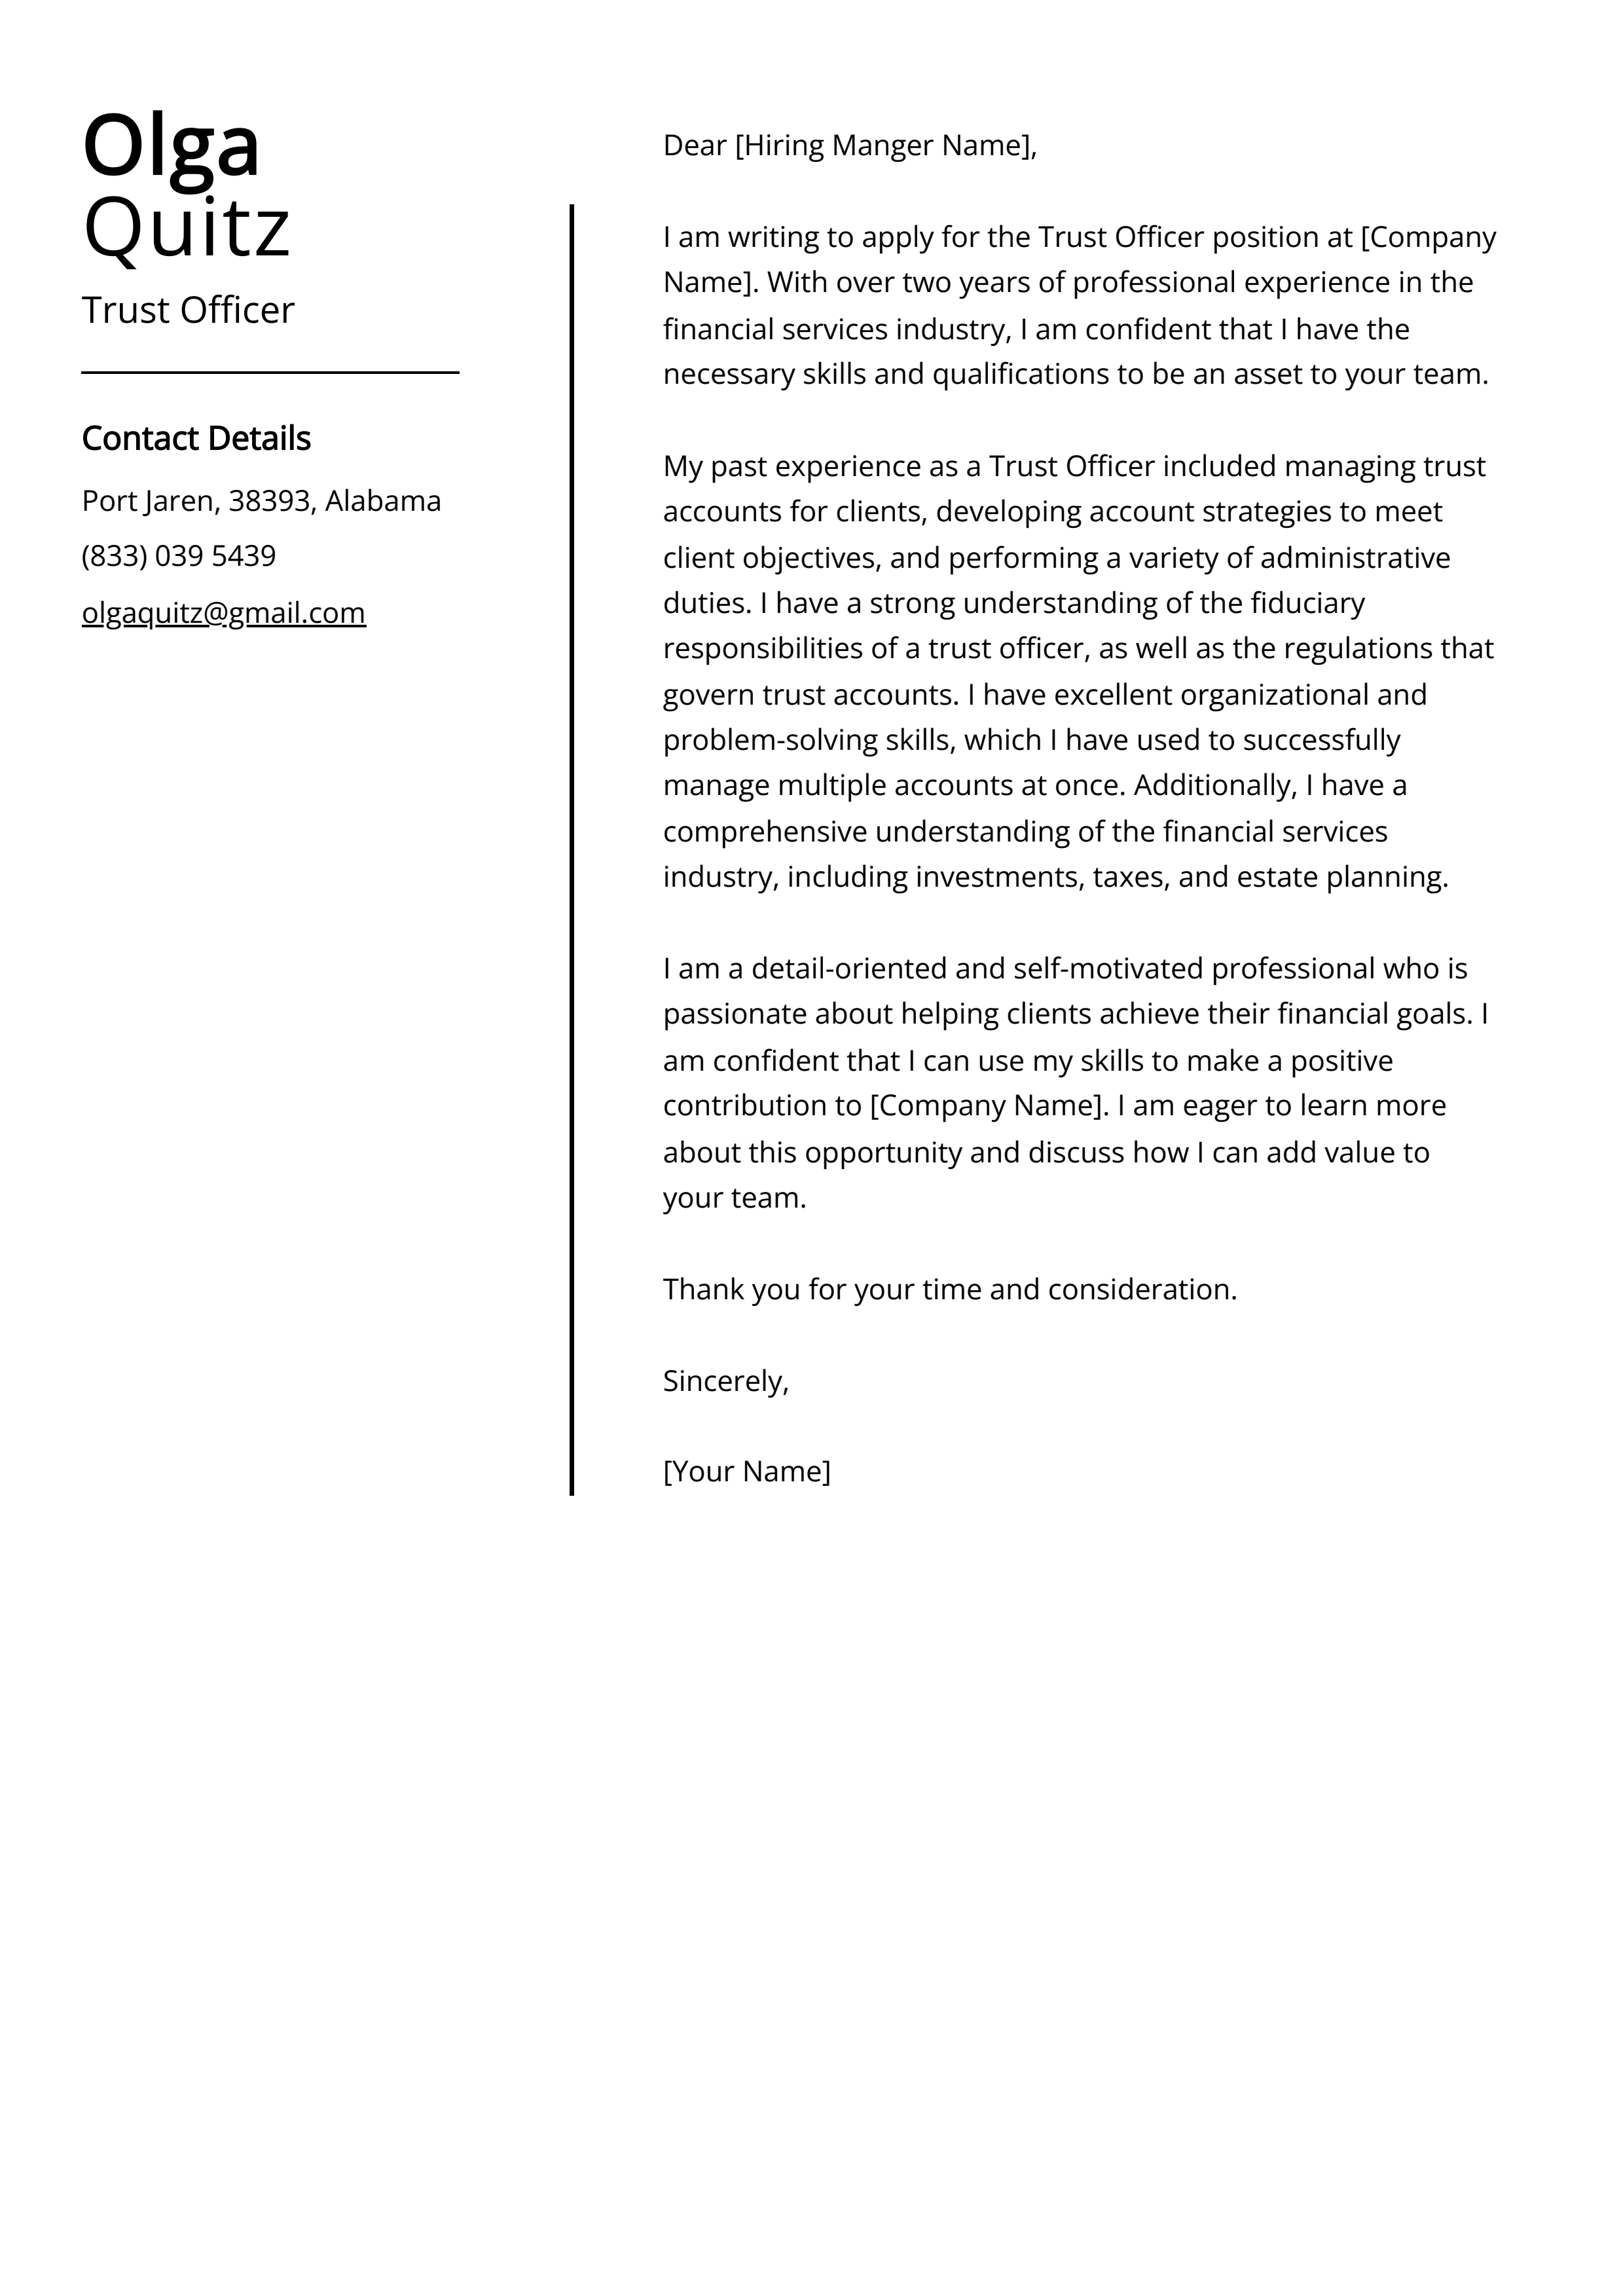 Trust Officer Cover Letter Example